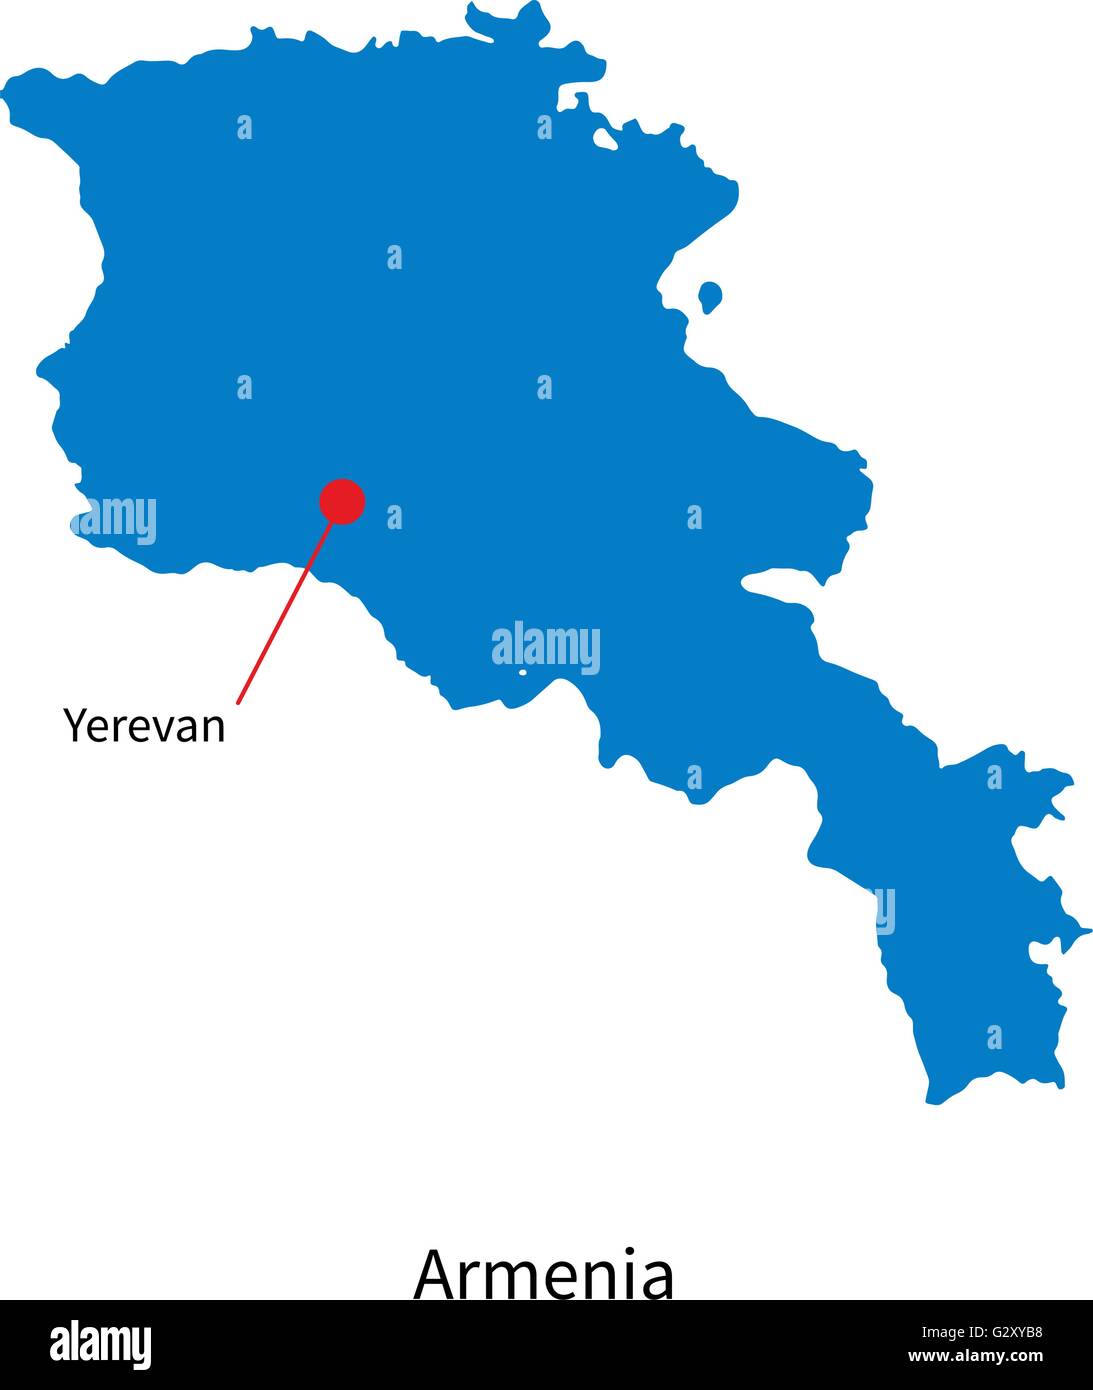 9,690 Armenia Map Images, Stock Photos, 3D objects, & Vectors